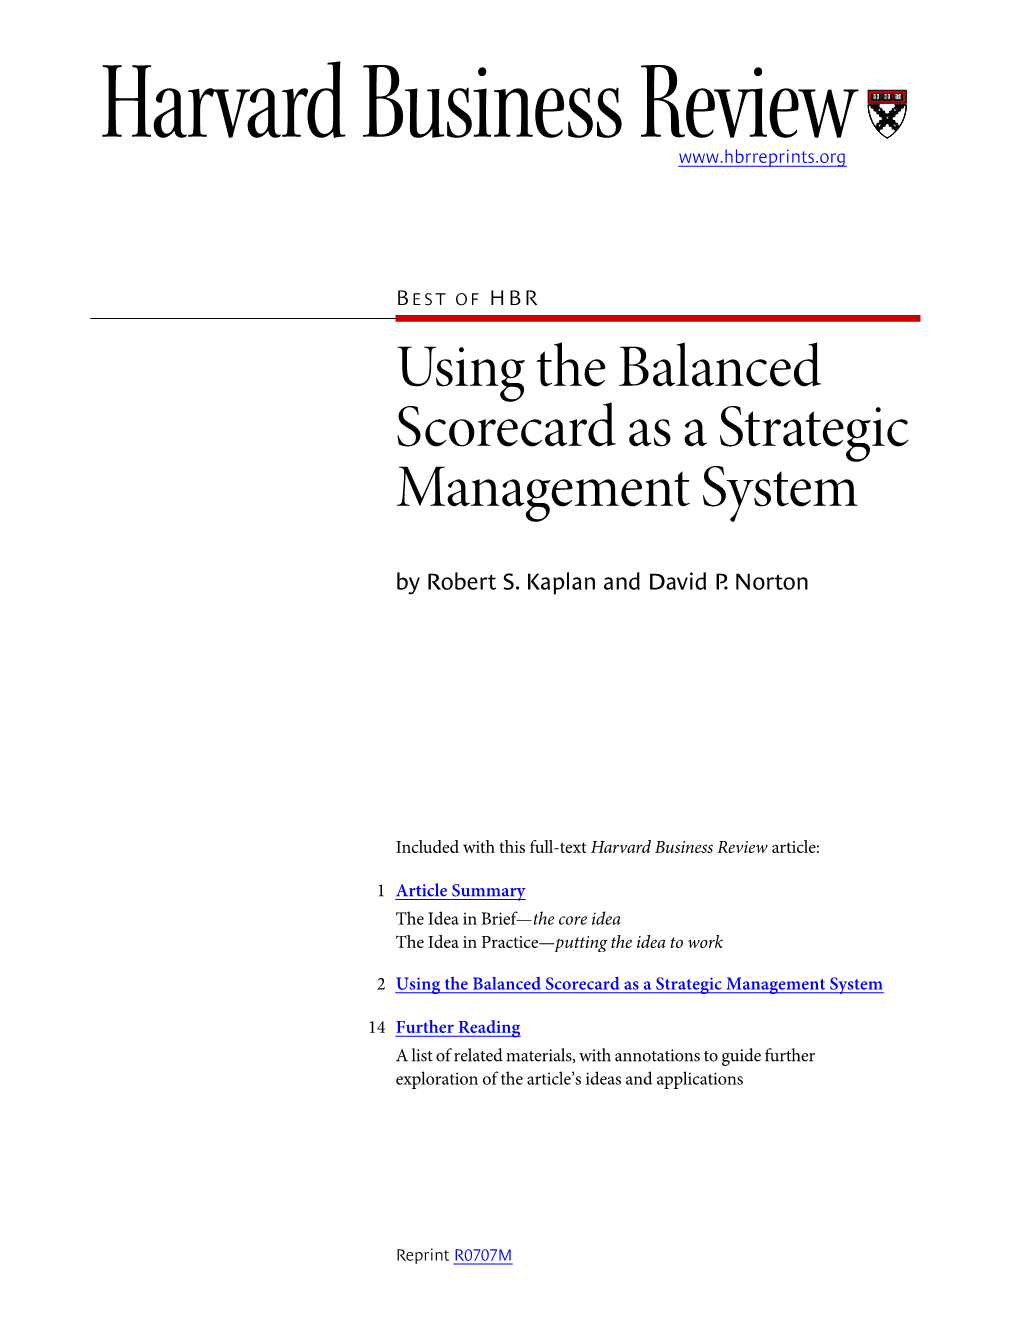 Using the Balanced Scorecard As a Strategic Management System